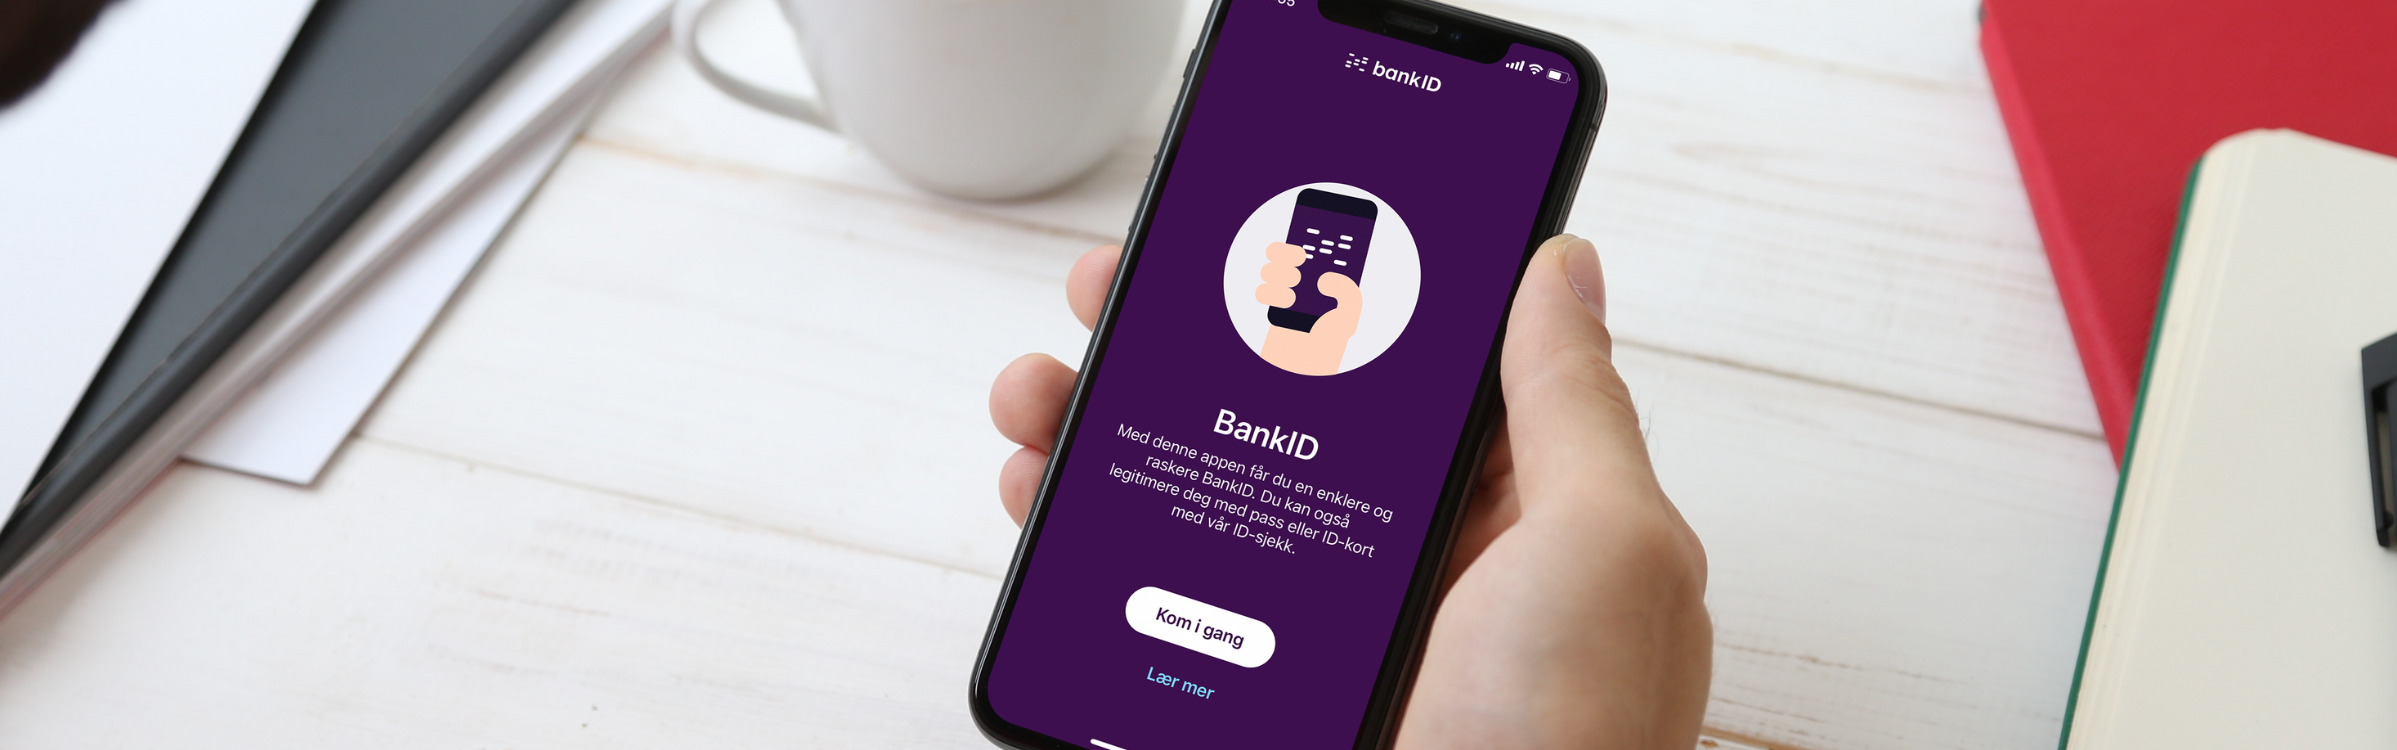 BankID-app with biometrics